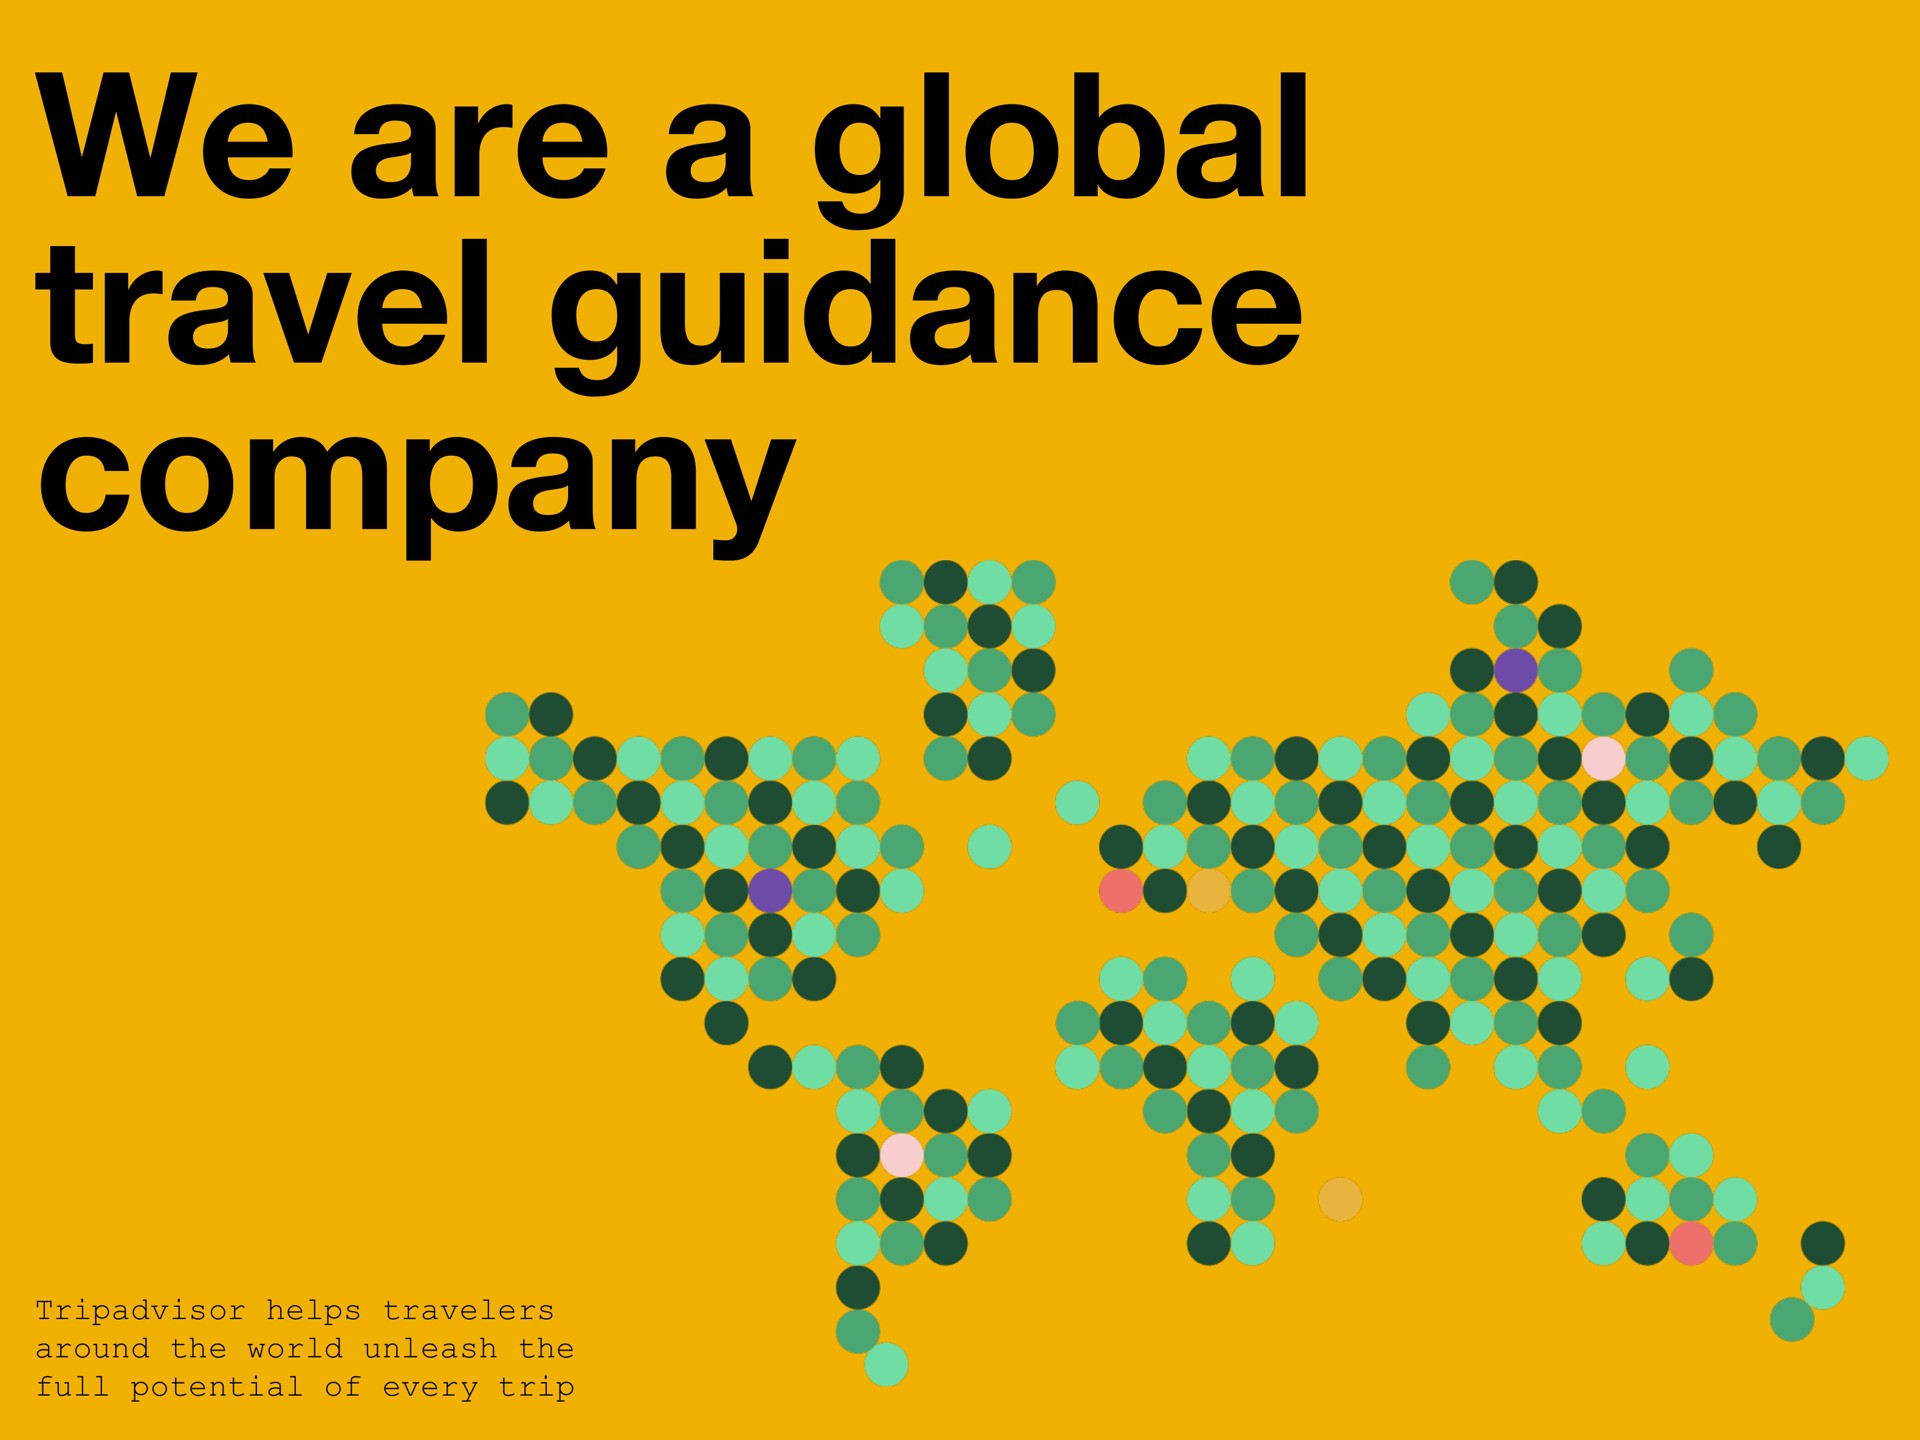 we are a global travel guidance company | Tripadvisor